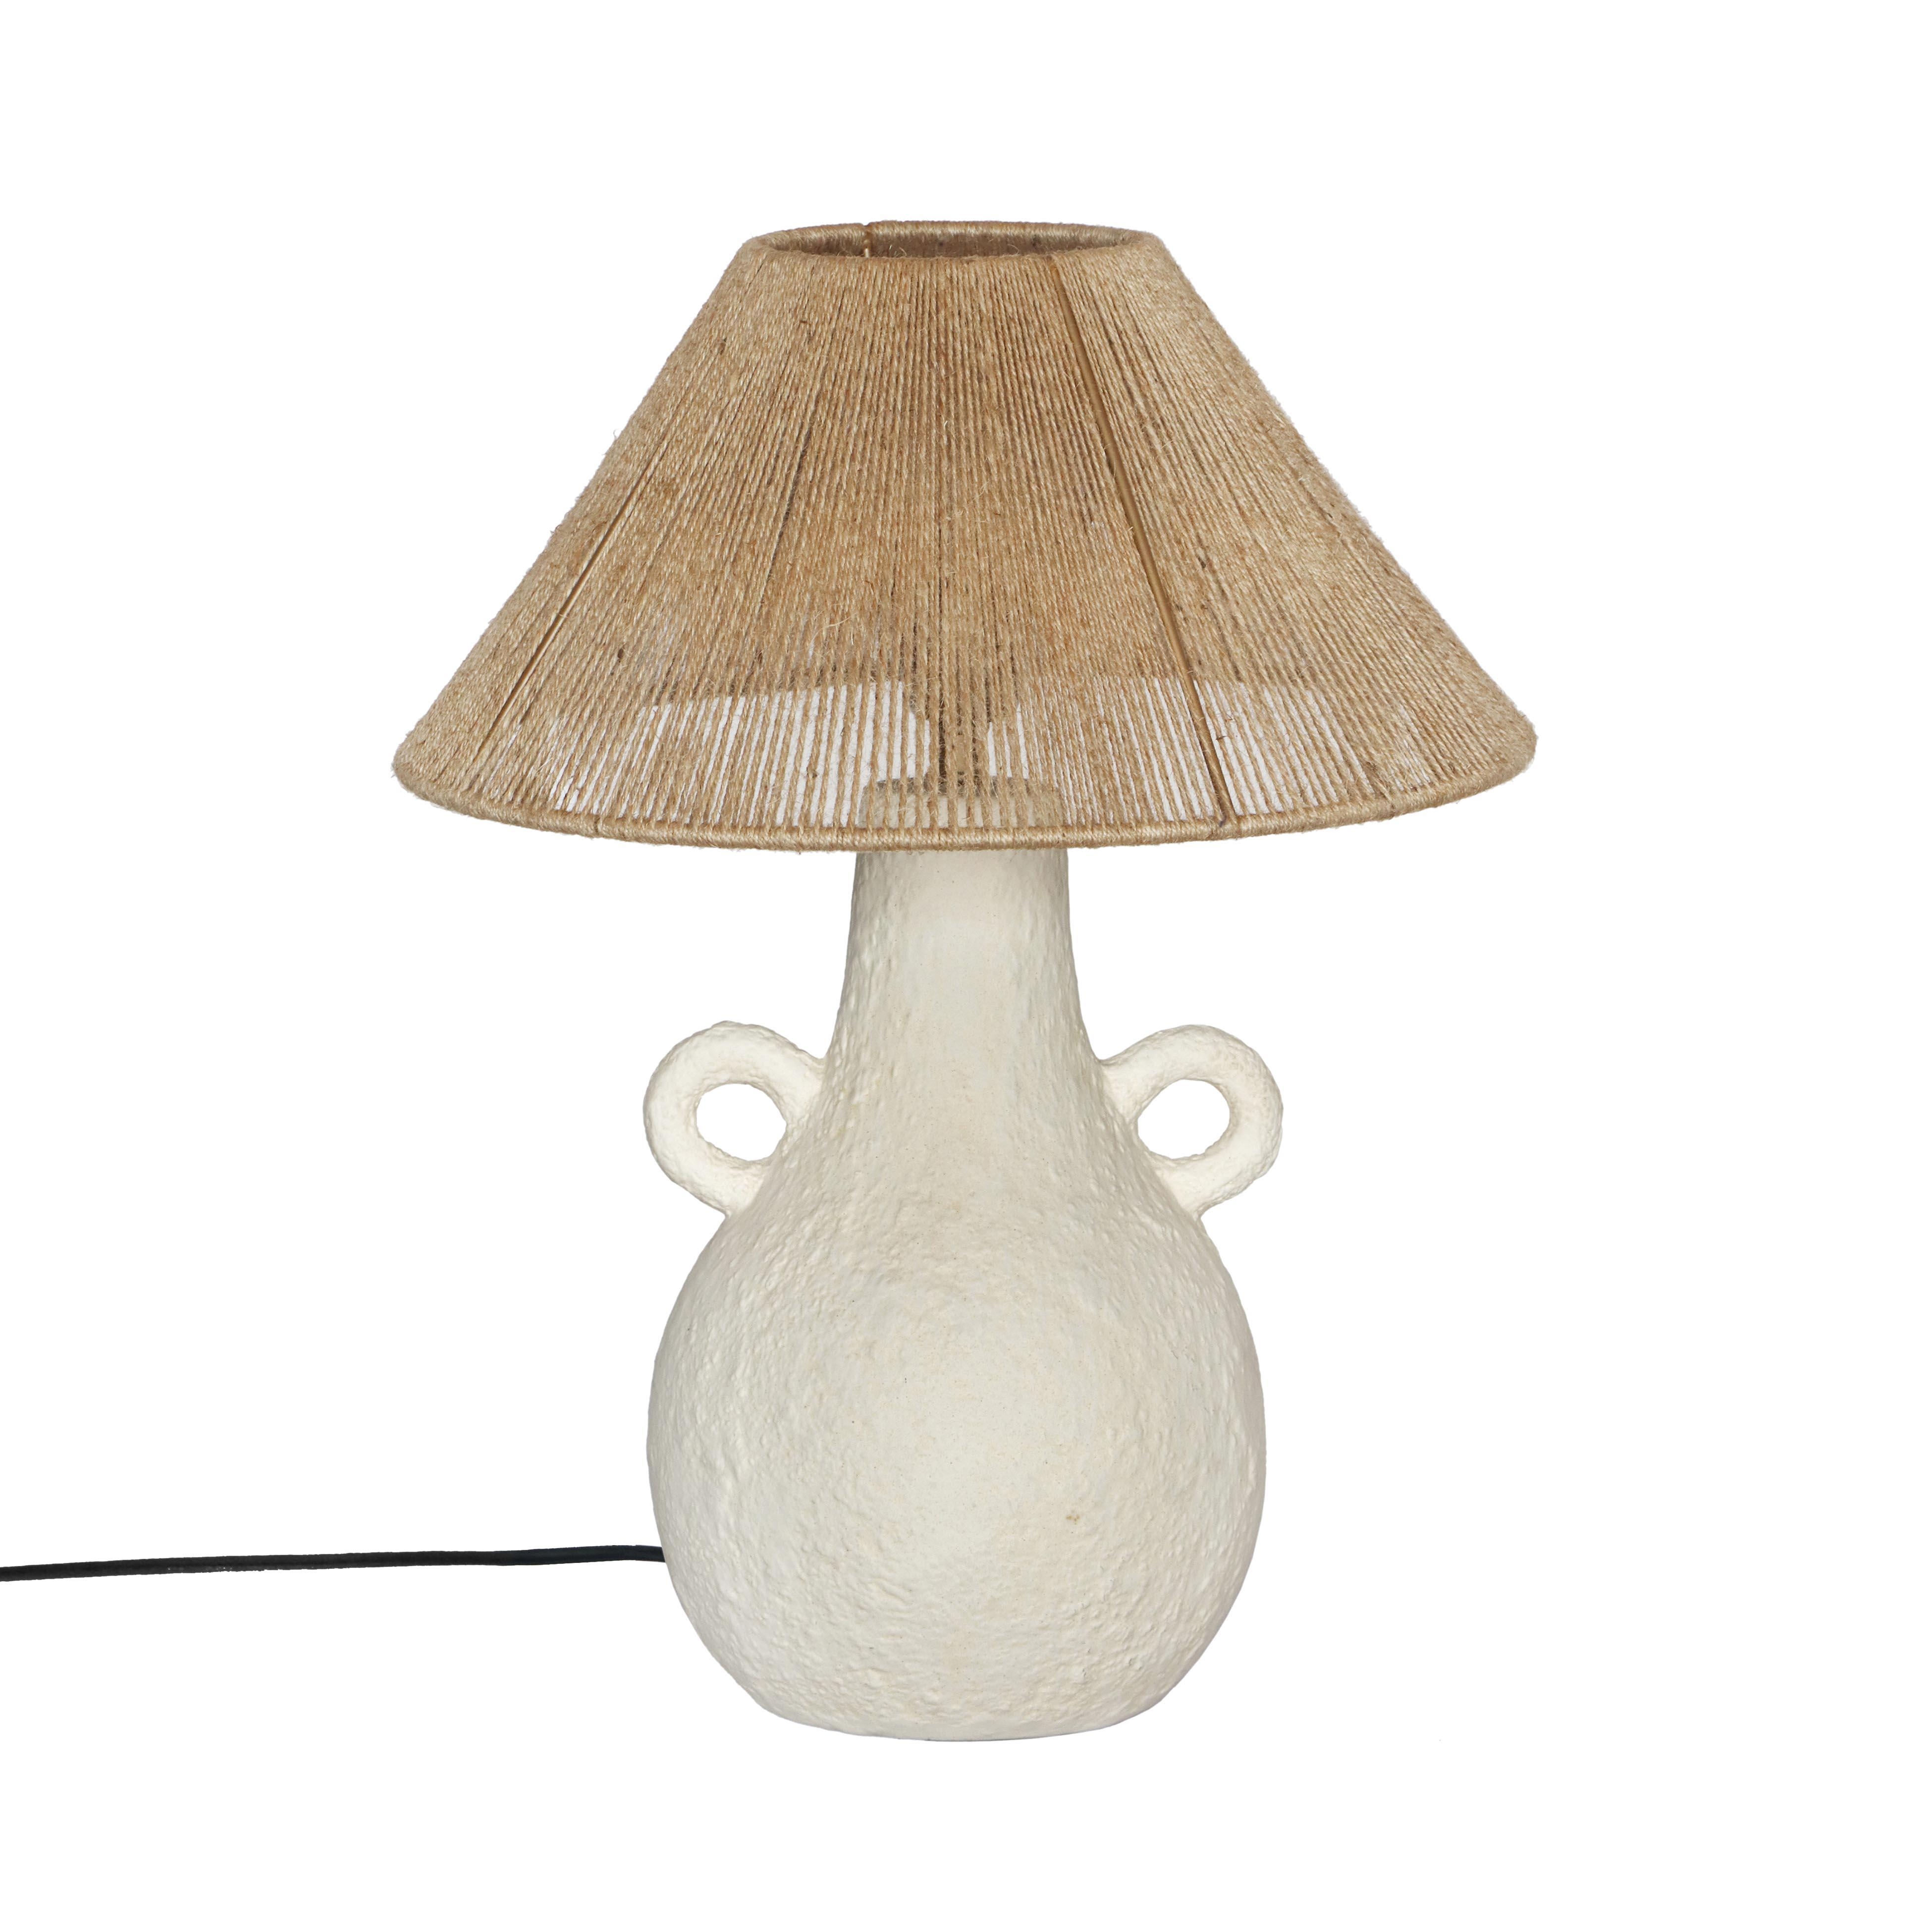 Lalit Natural & White Ceramic Table Lamp - Image 0